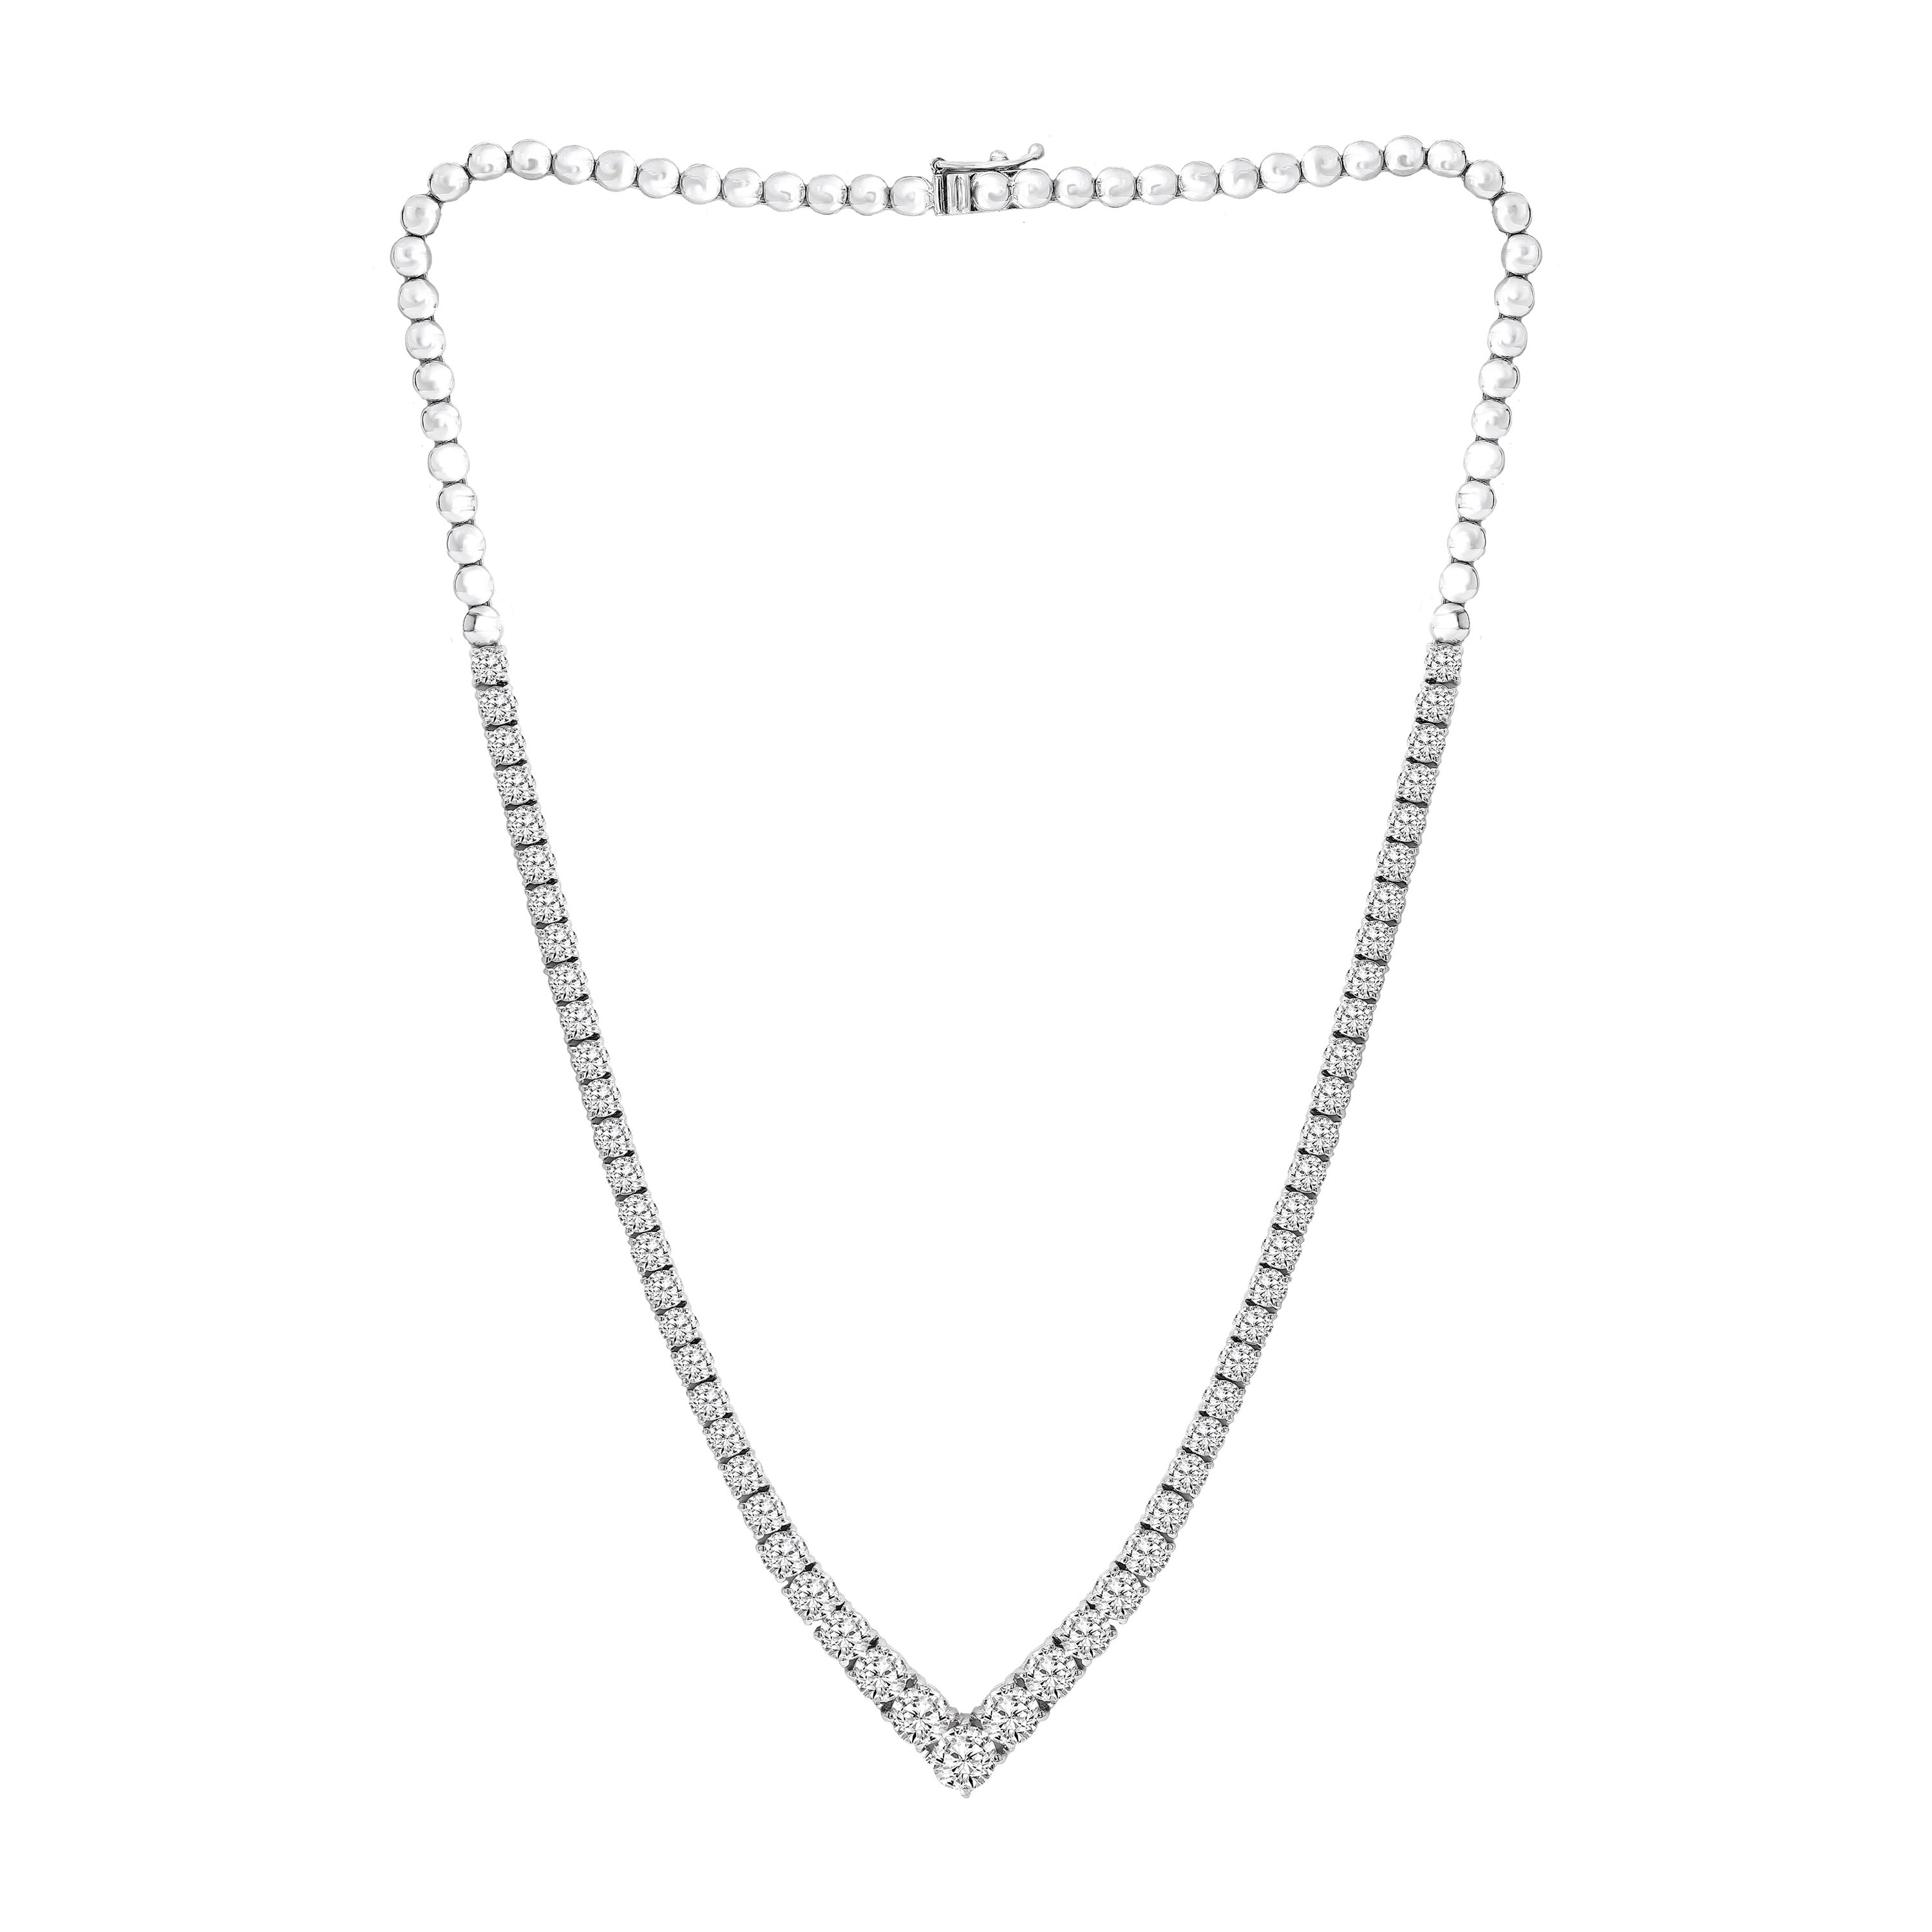 13.03 Carat Diamond Tennis Necklace in 14k White Gold